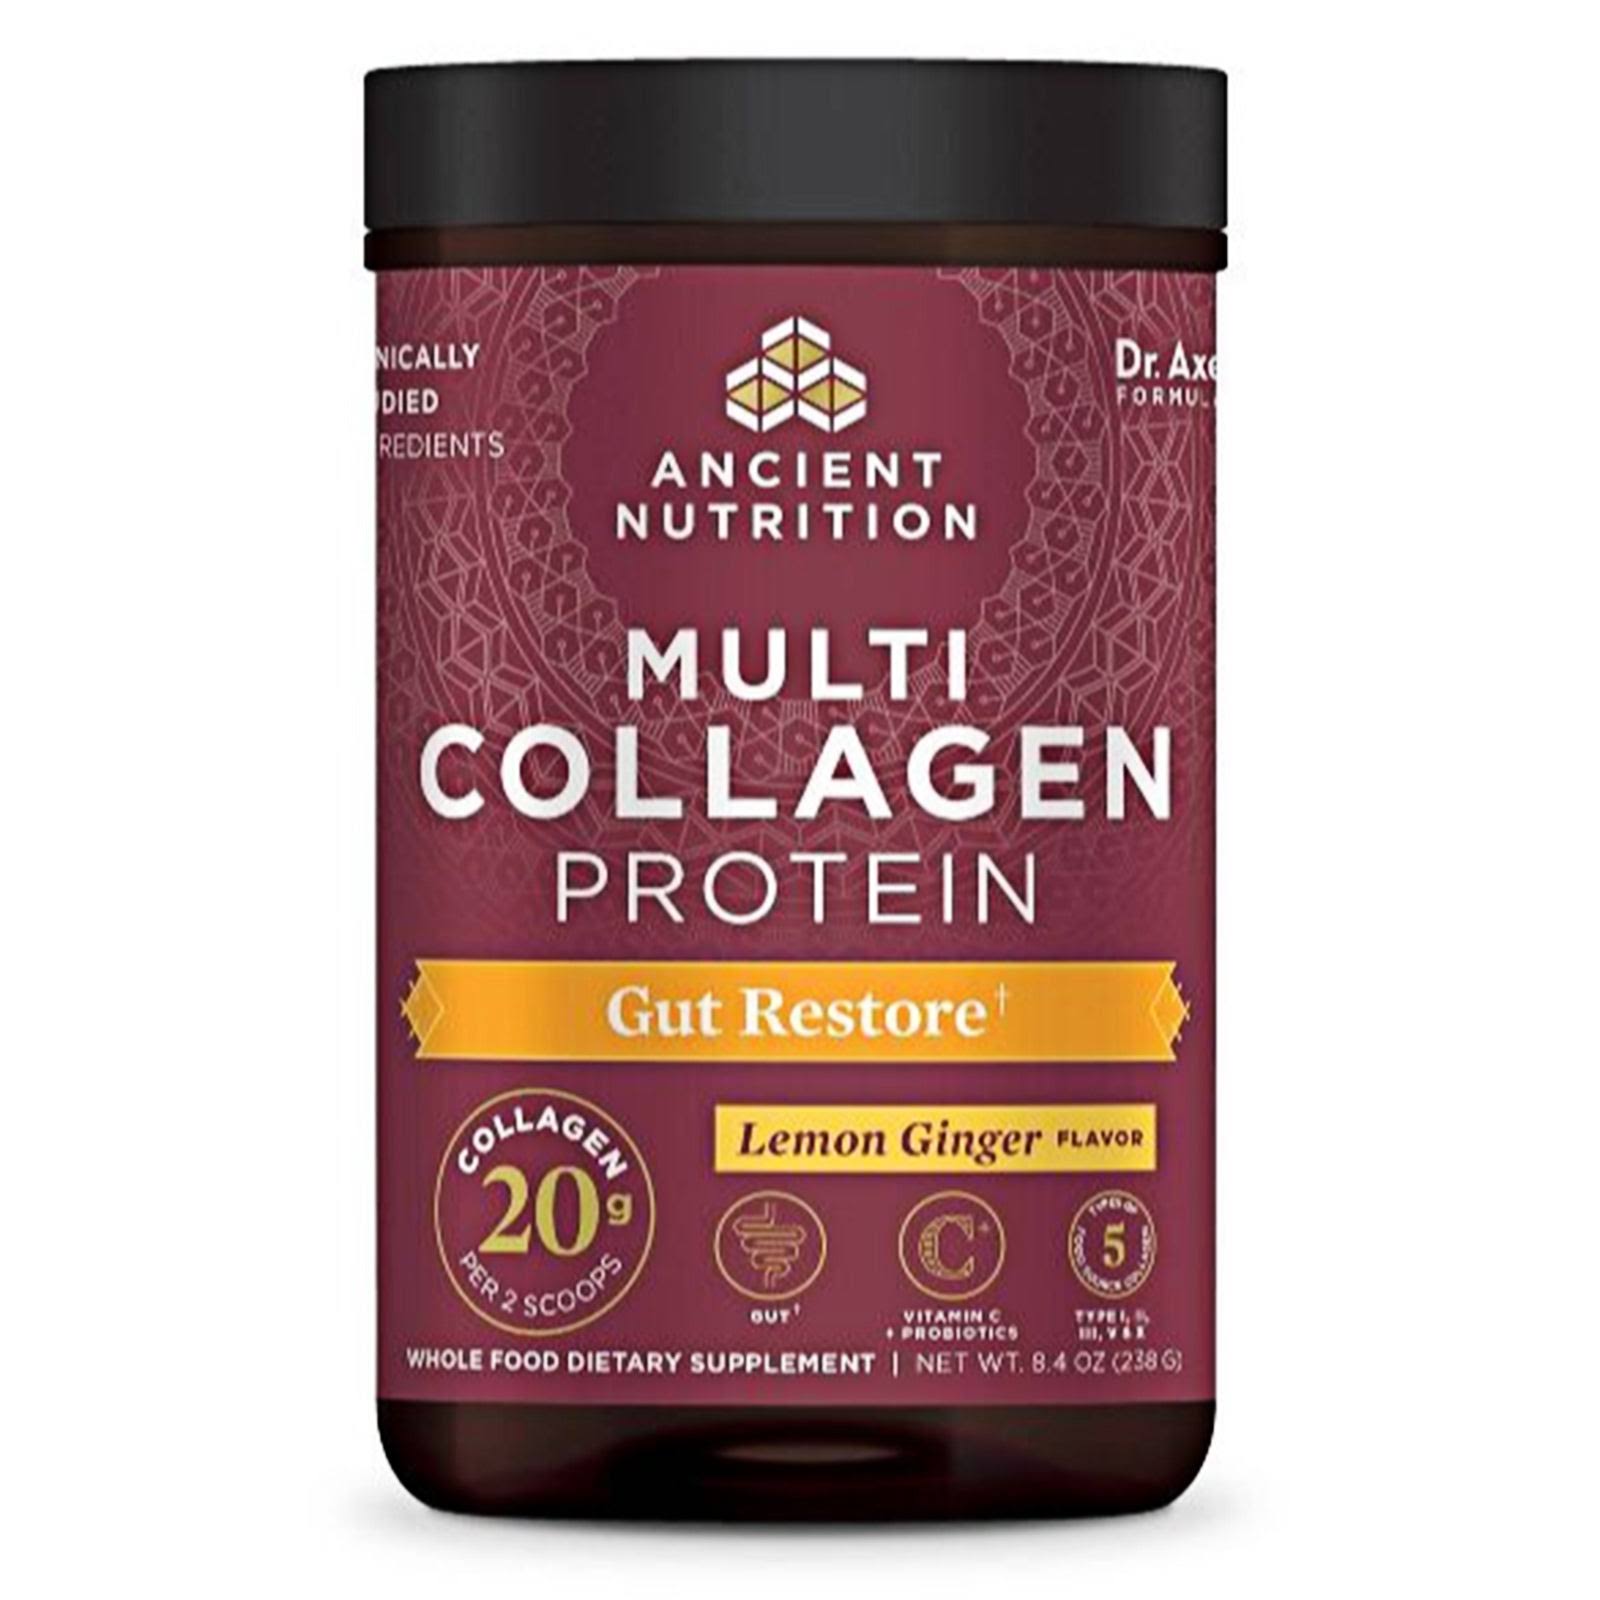 Ancient Nutrition Multi Collagen Protein - Gut Restore (Lemon Ginger)